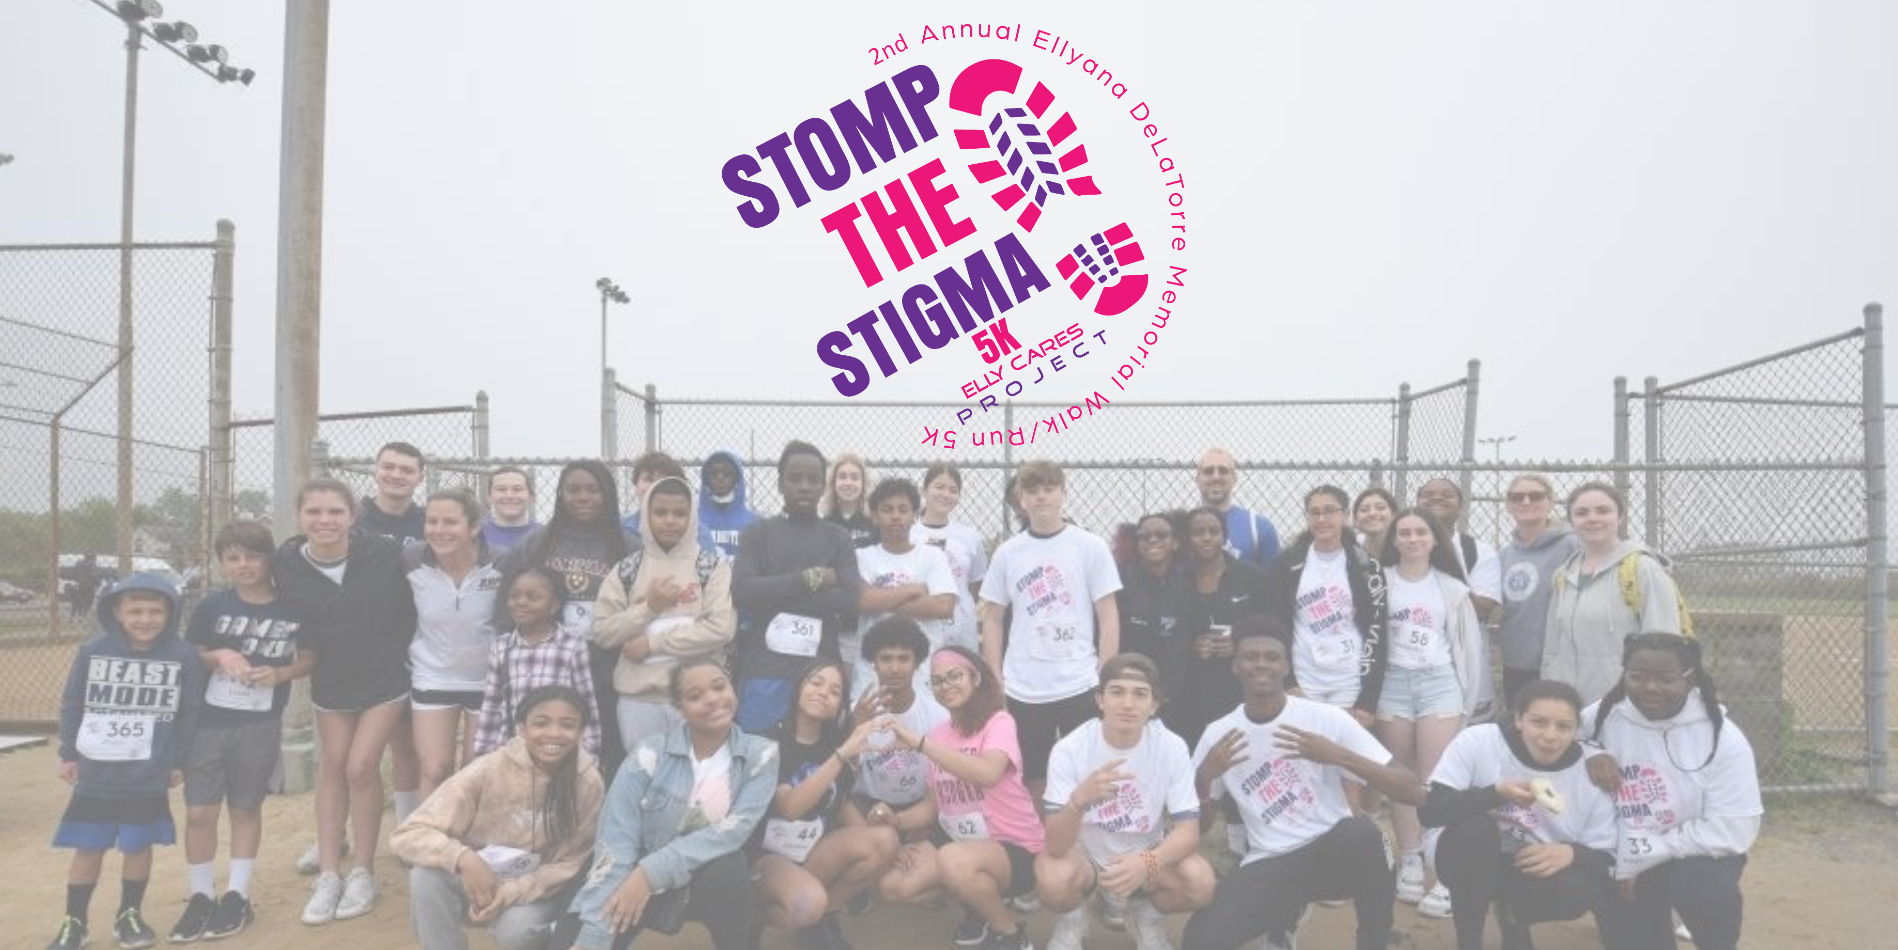 Stomp The Stigma 5K promotional image